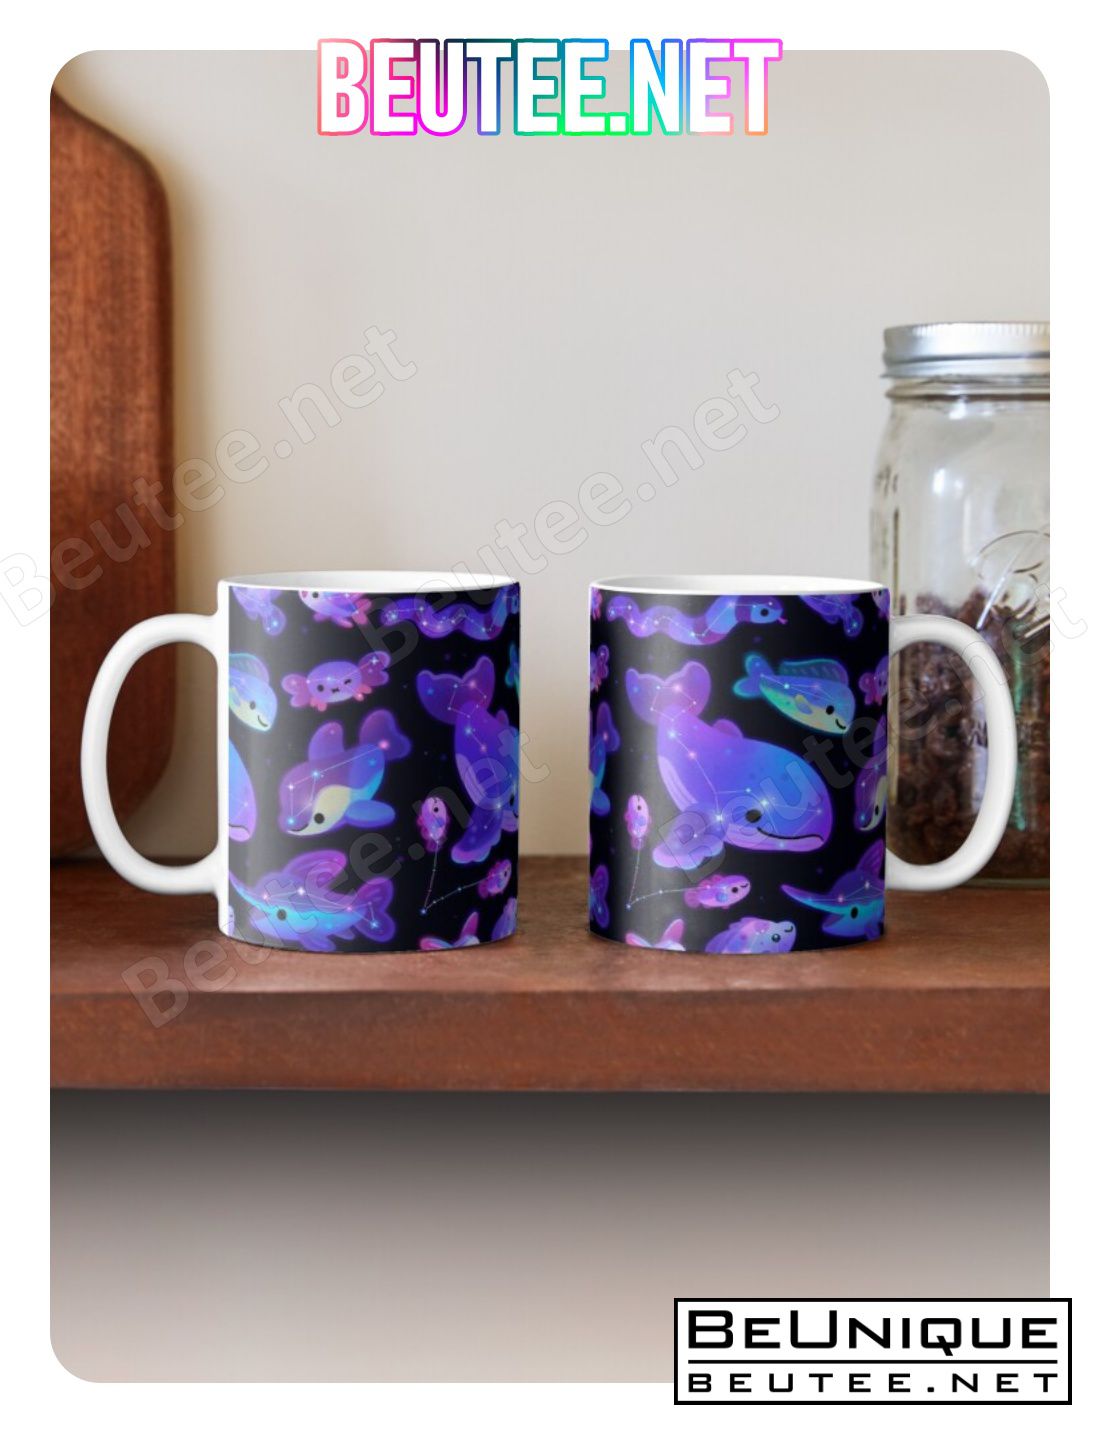 Ocean Constellations Coffee Mug